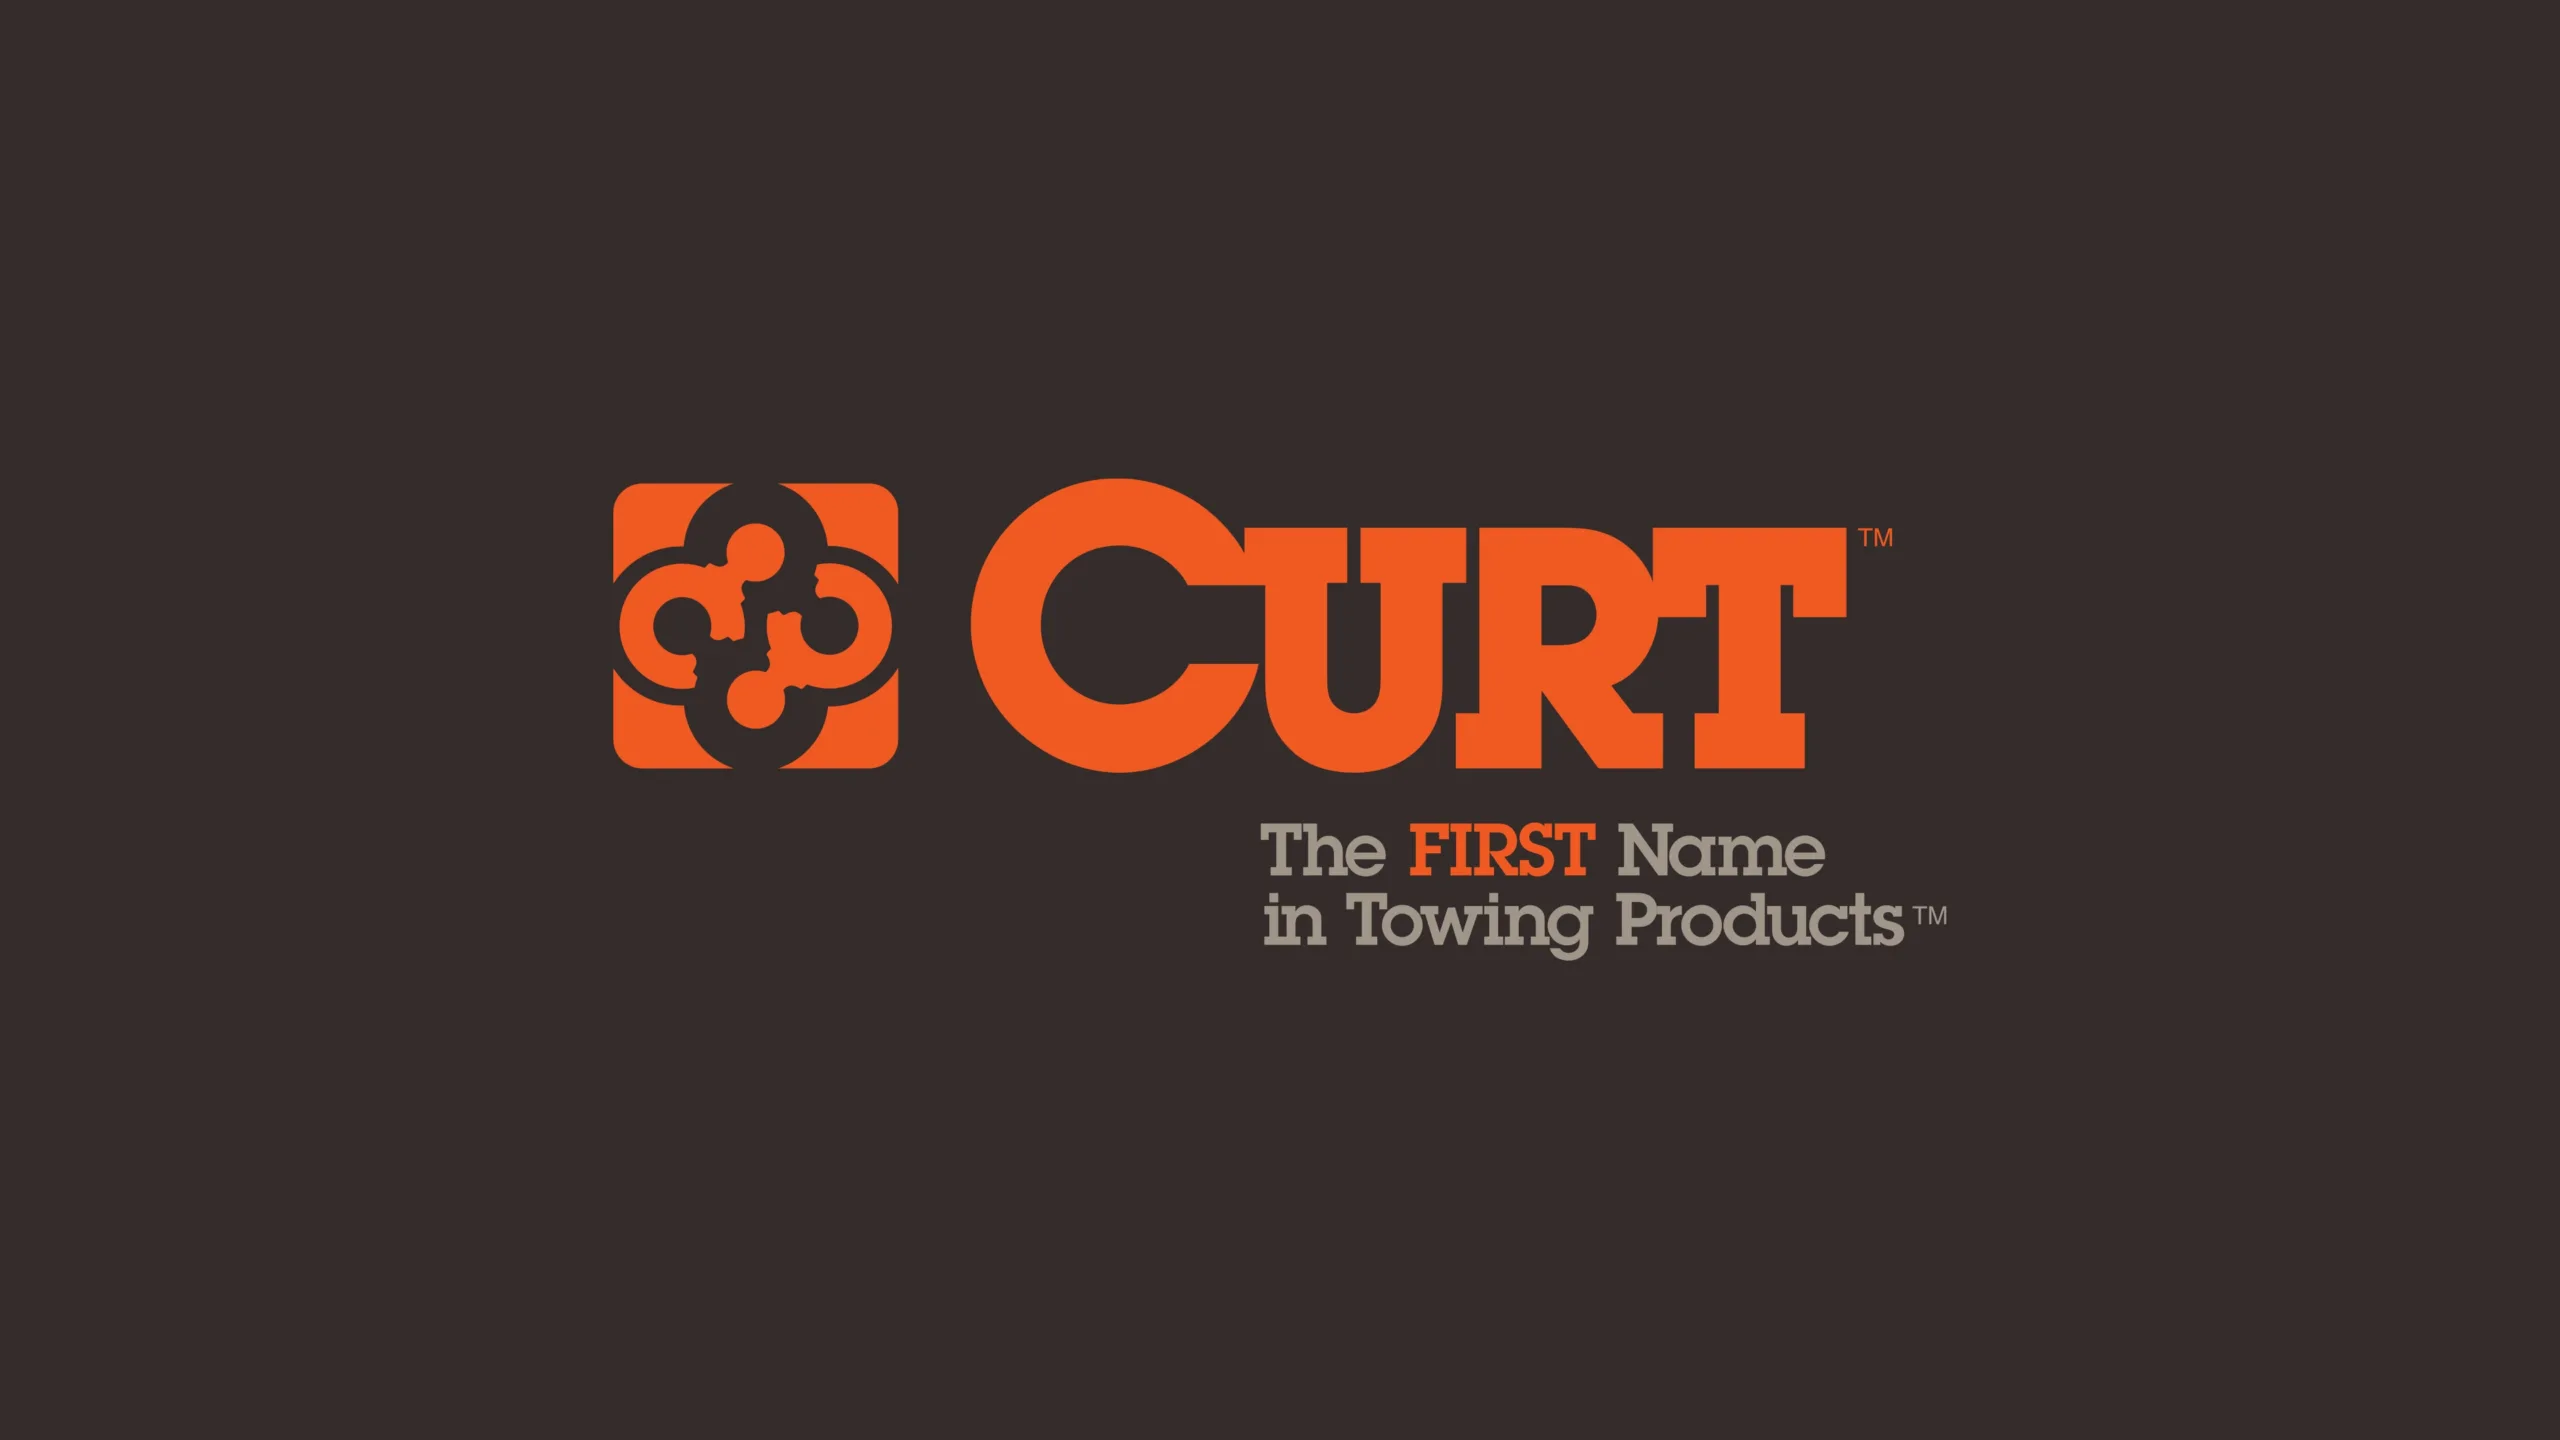 Curt graphic design, marketiing, logo design, branding and advertising